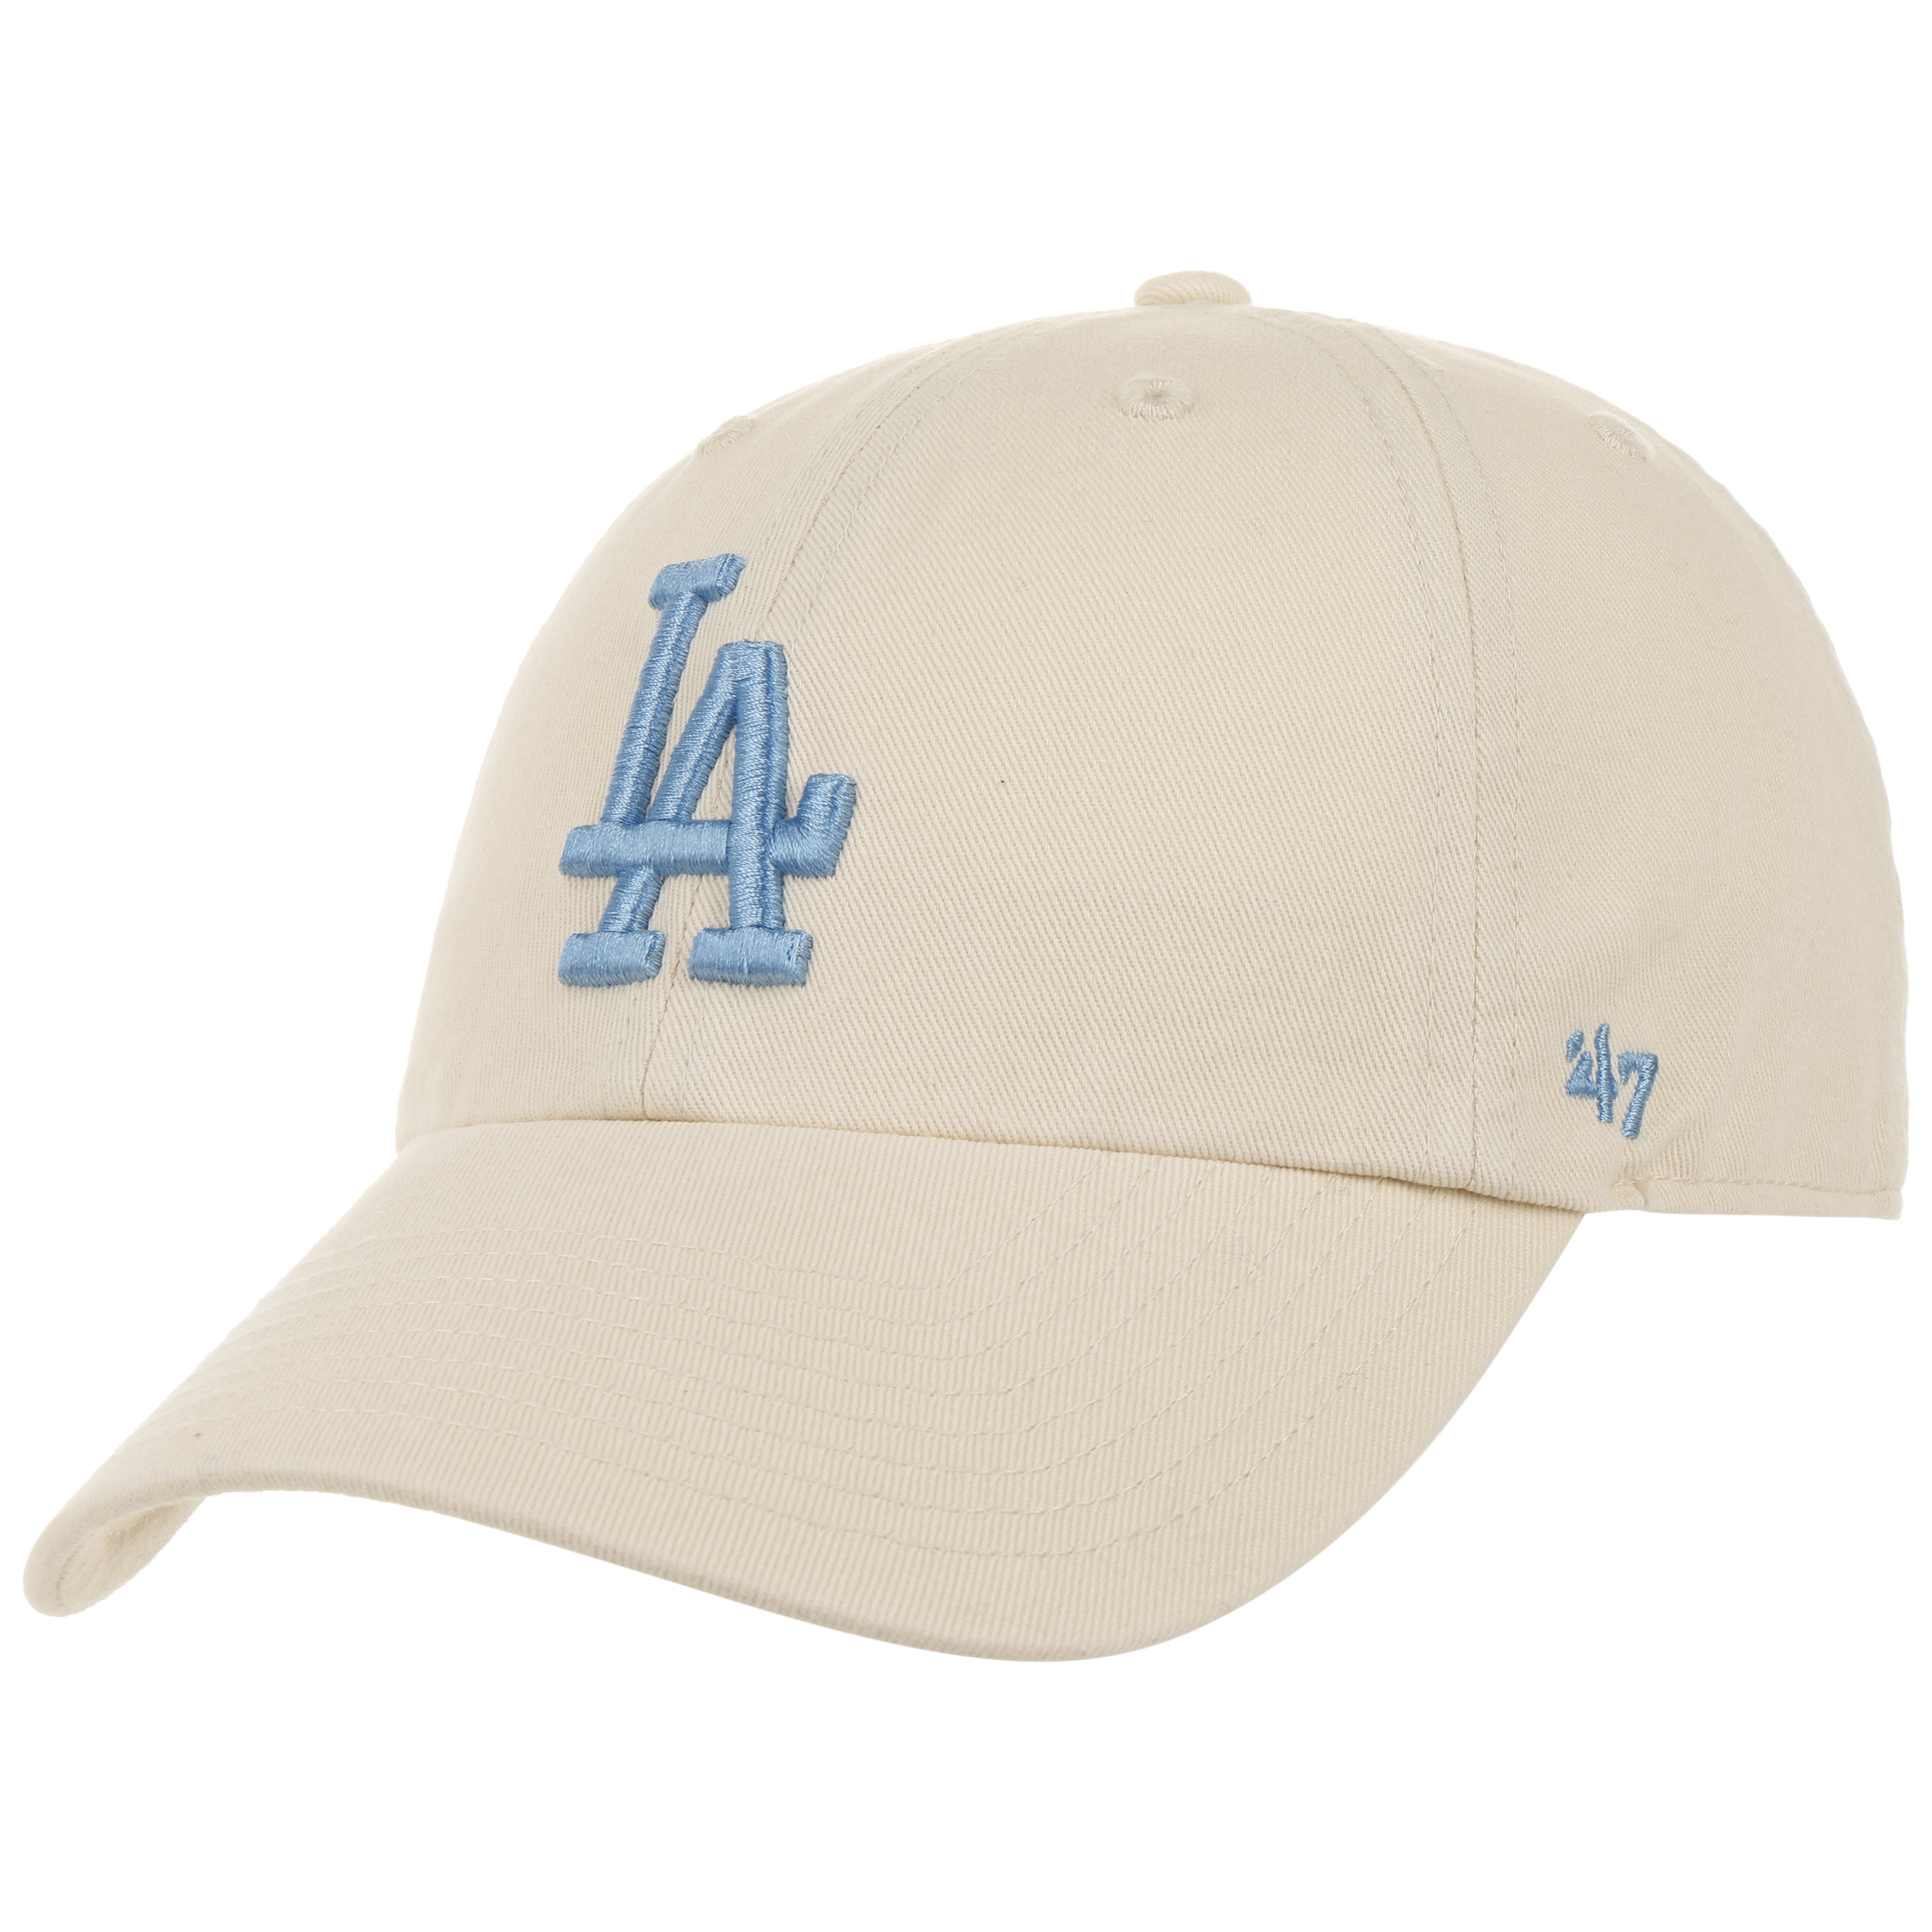  '47 Brand Los Angeles Dodgers Cap B-MVP12WBV-BN, Unisex, czapki  z daszkiem, Beige/Blue, : Sports & Outdoors